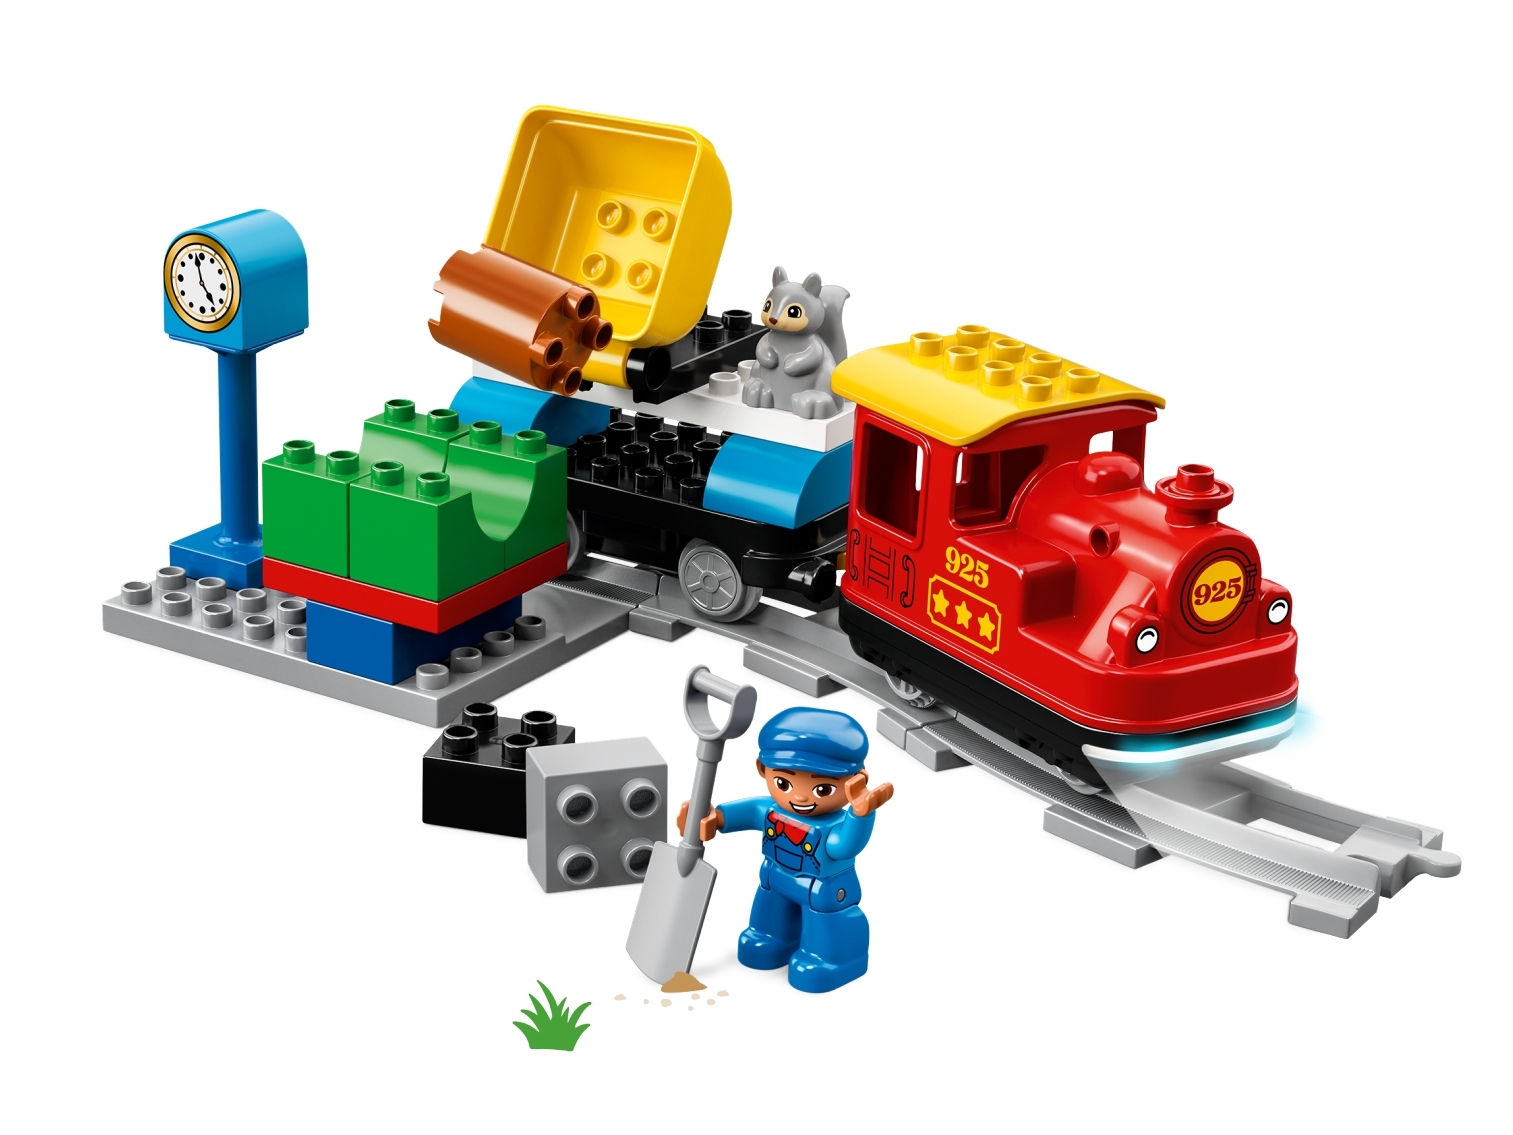 Circuit train Lego Duplo 3771